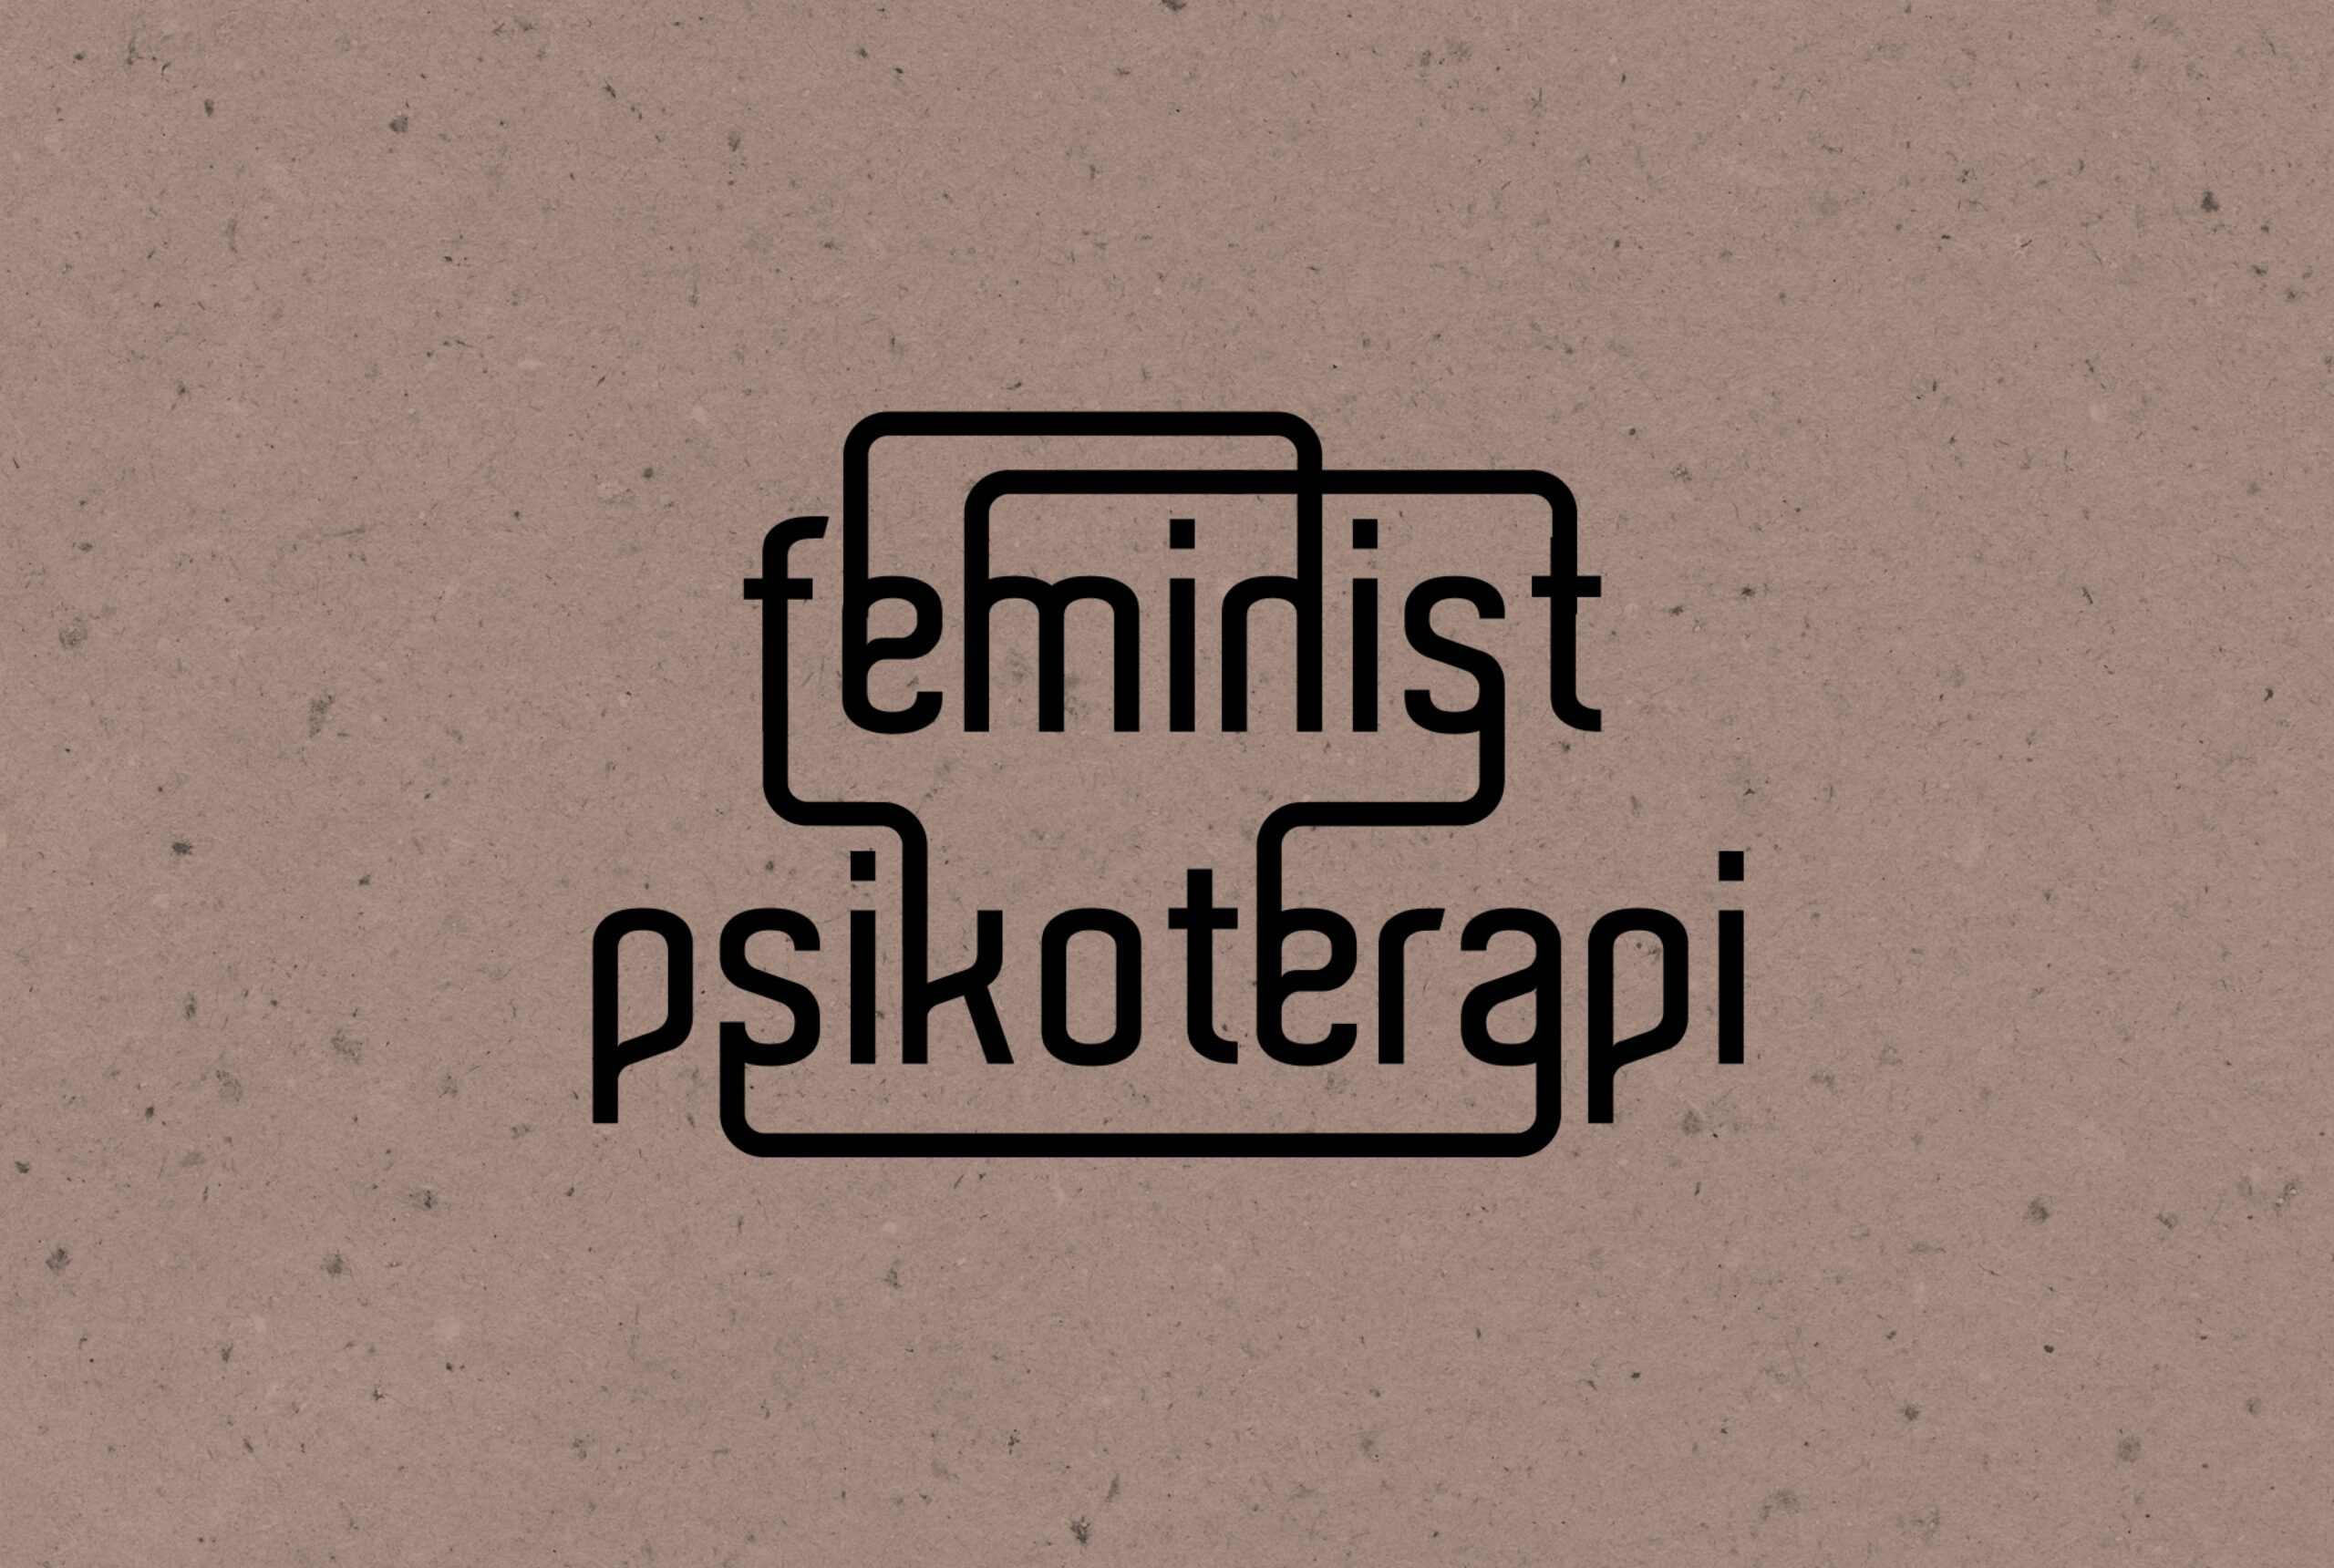 Feminist Psikoterapi